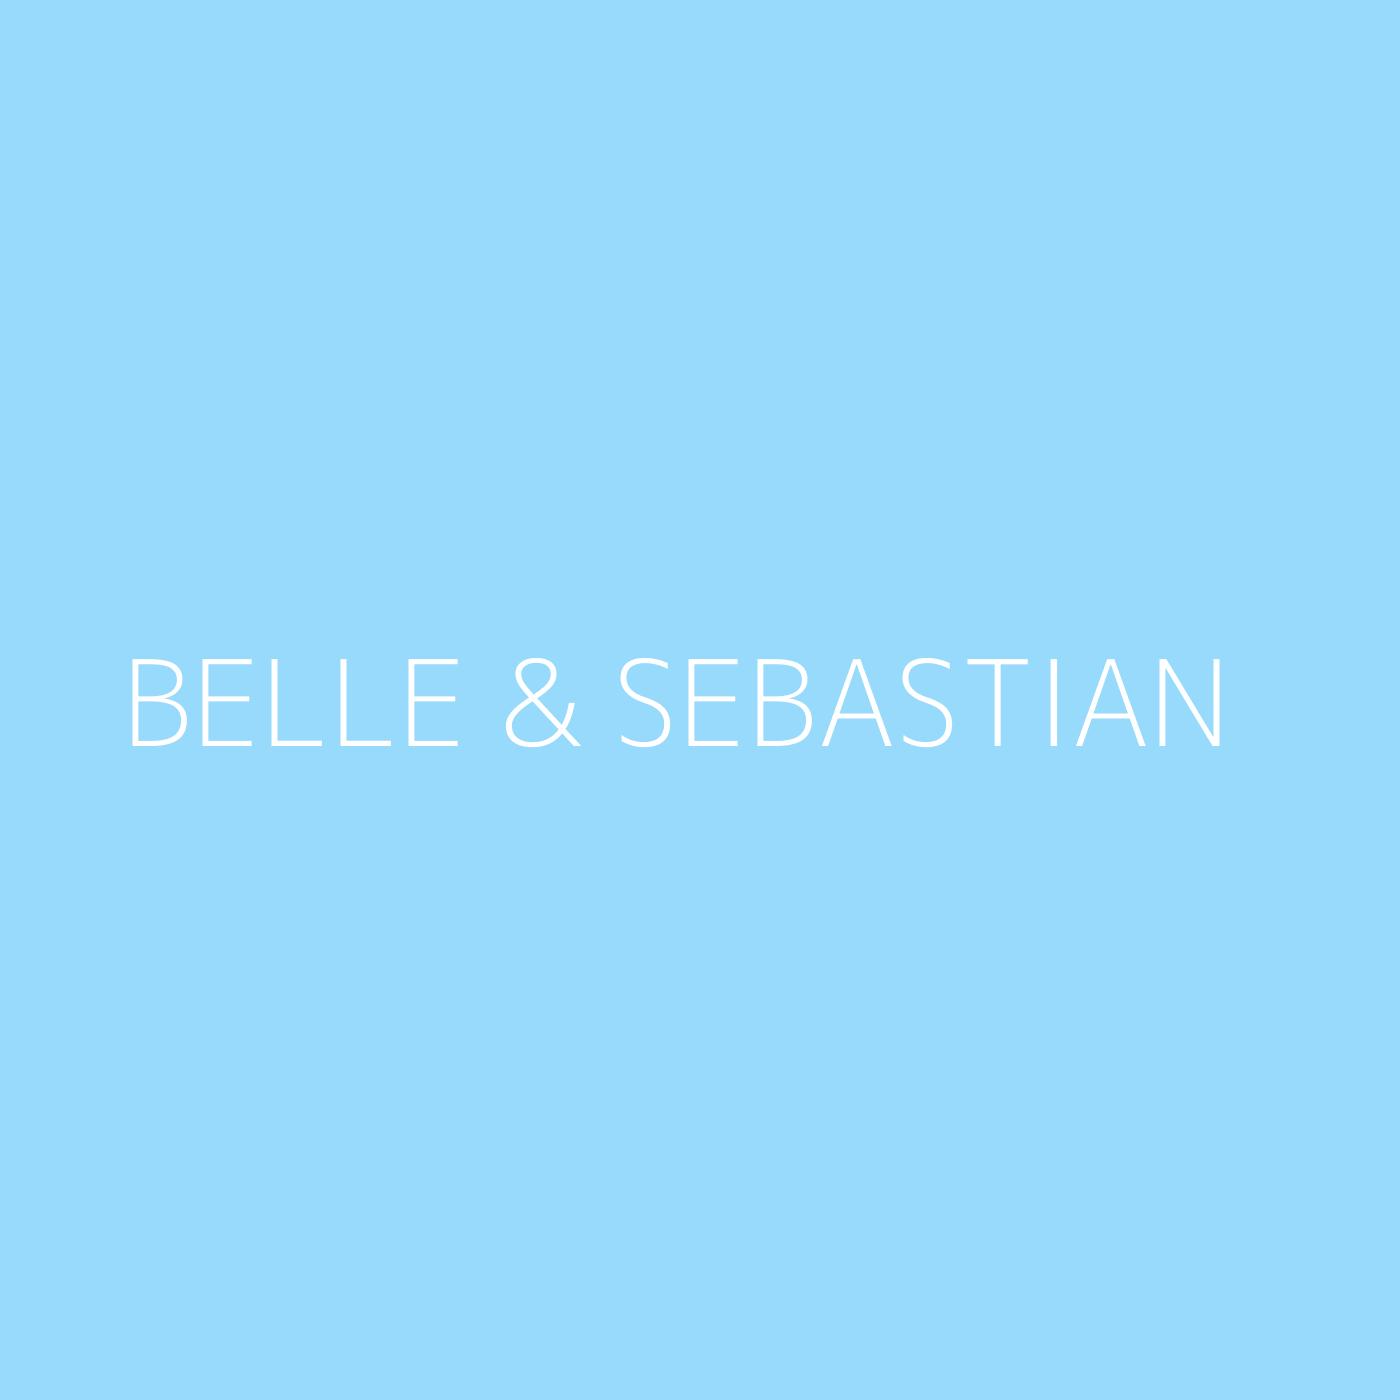 Belle & Sebastian Playlist Artwork